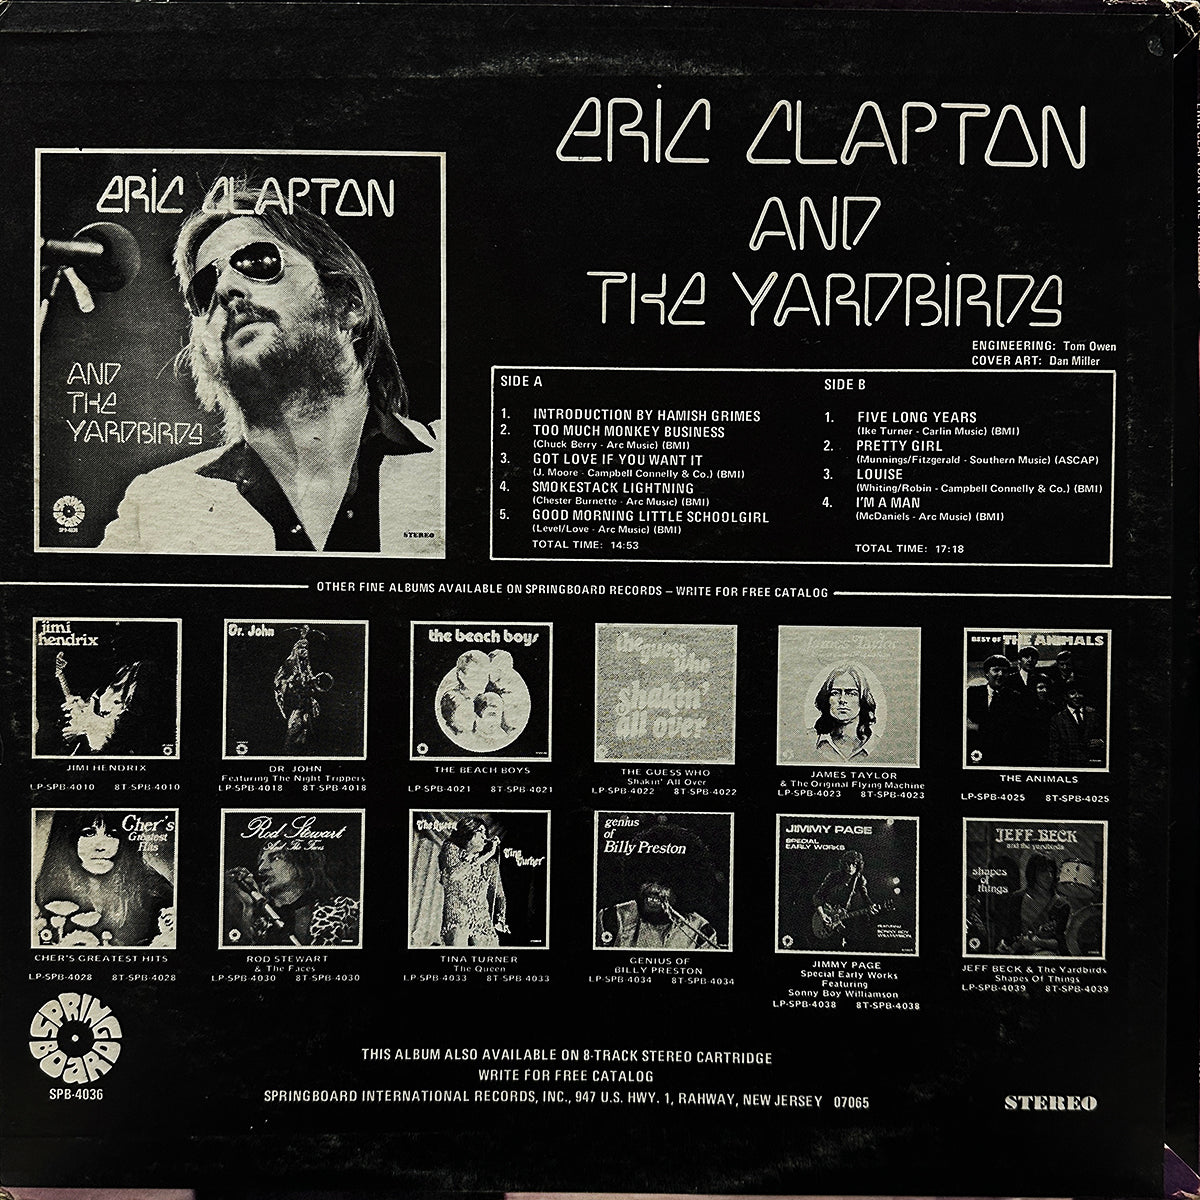 Eric Clapton And The Yardbirds